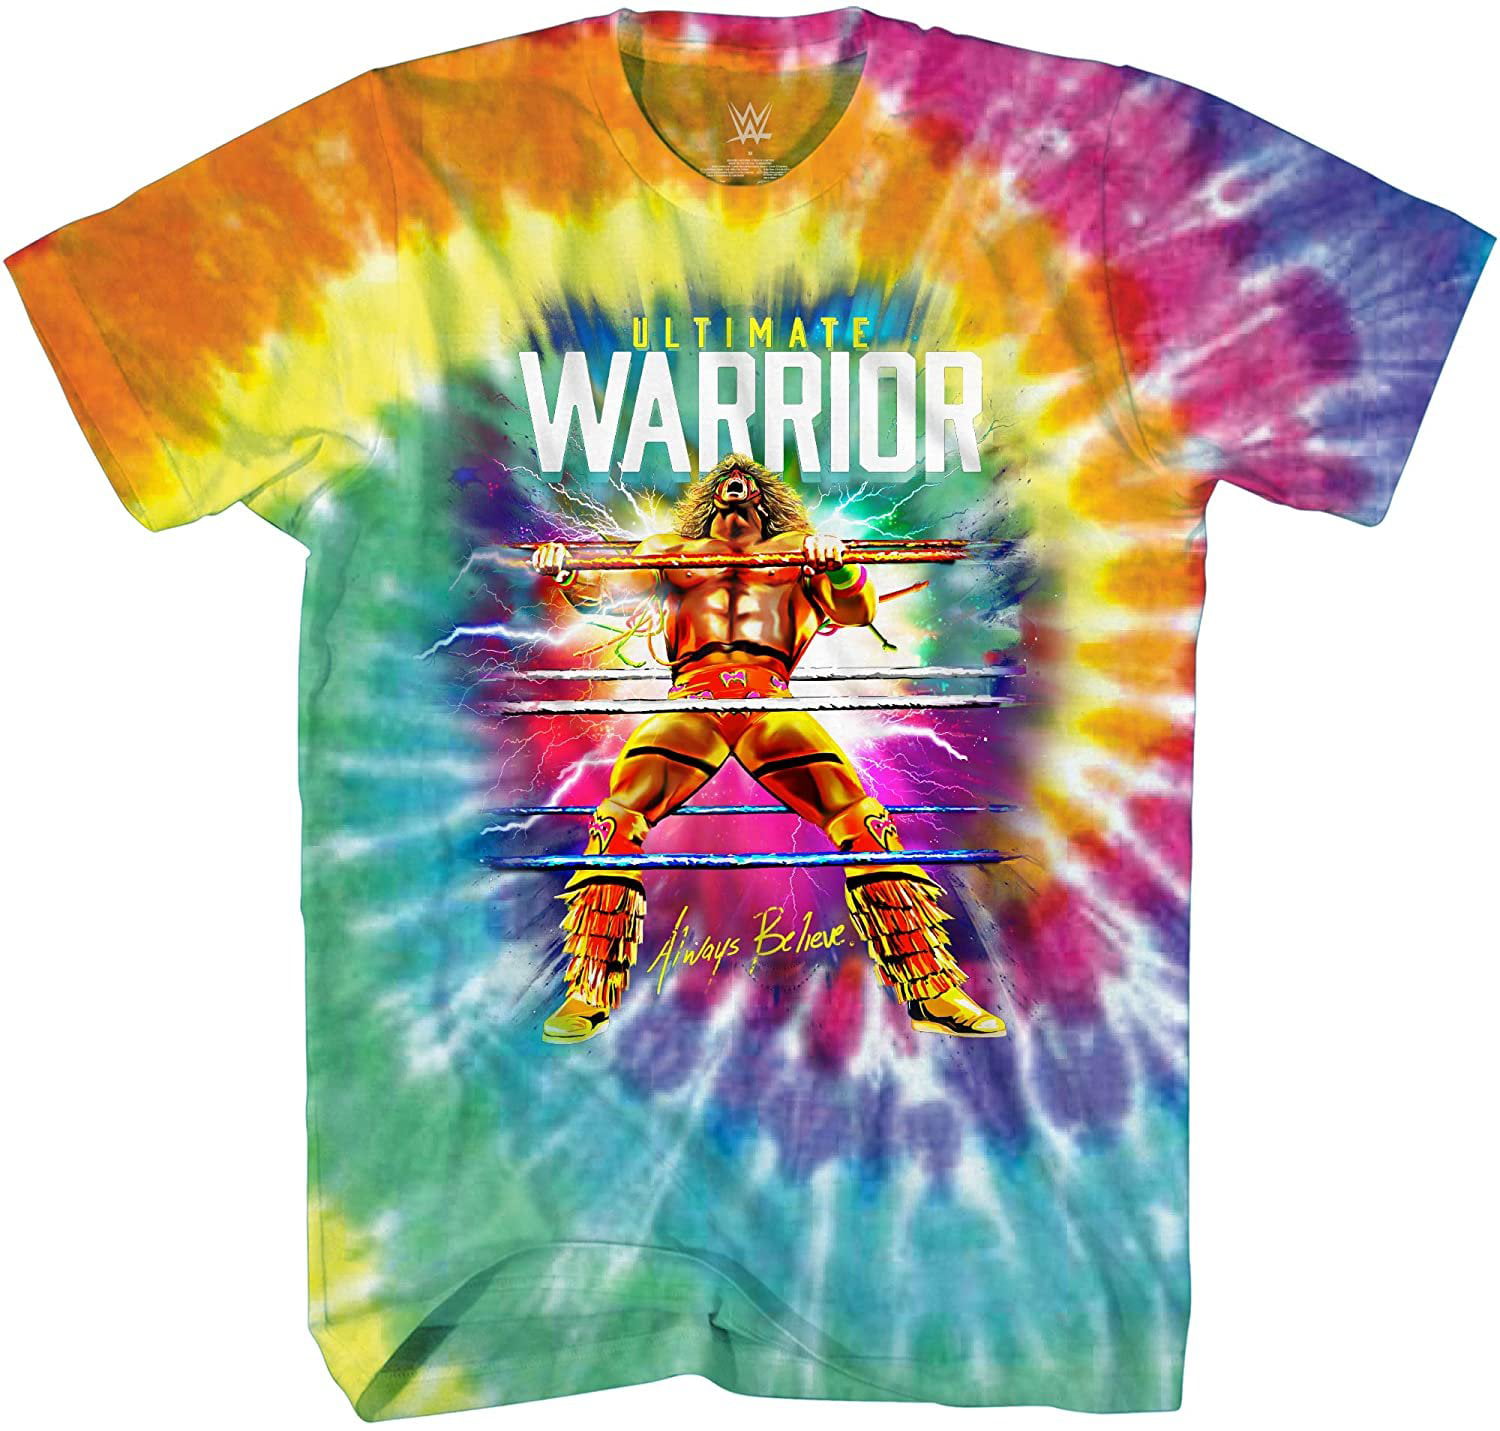 WWE Ultimate Warrior 'Warrior Rules' Custom Shirt For Mattel Figures. 